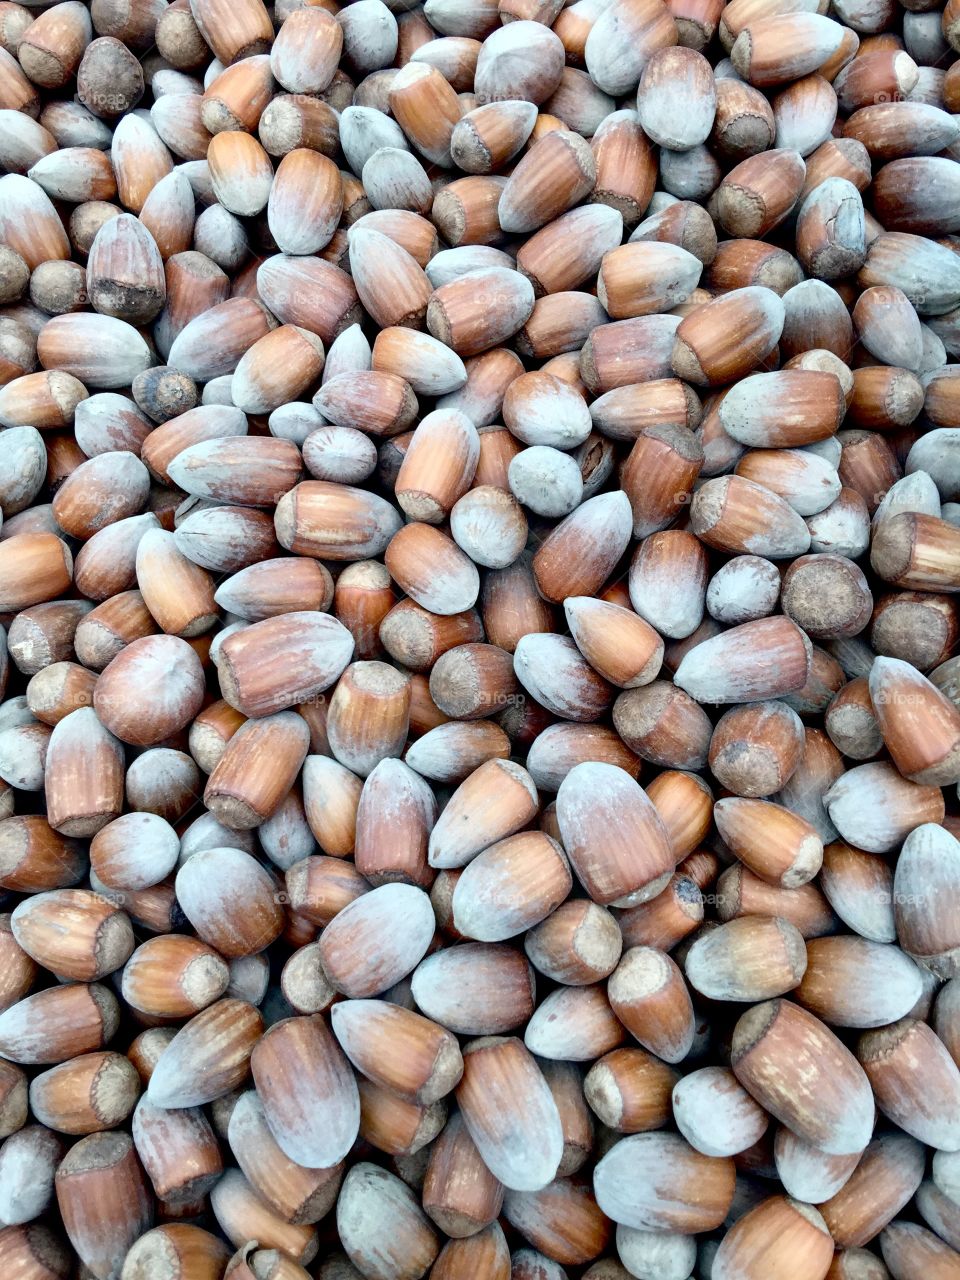 Close-up of a hazelnuts